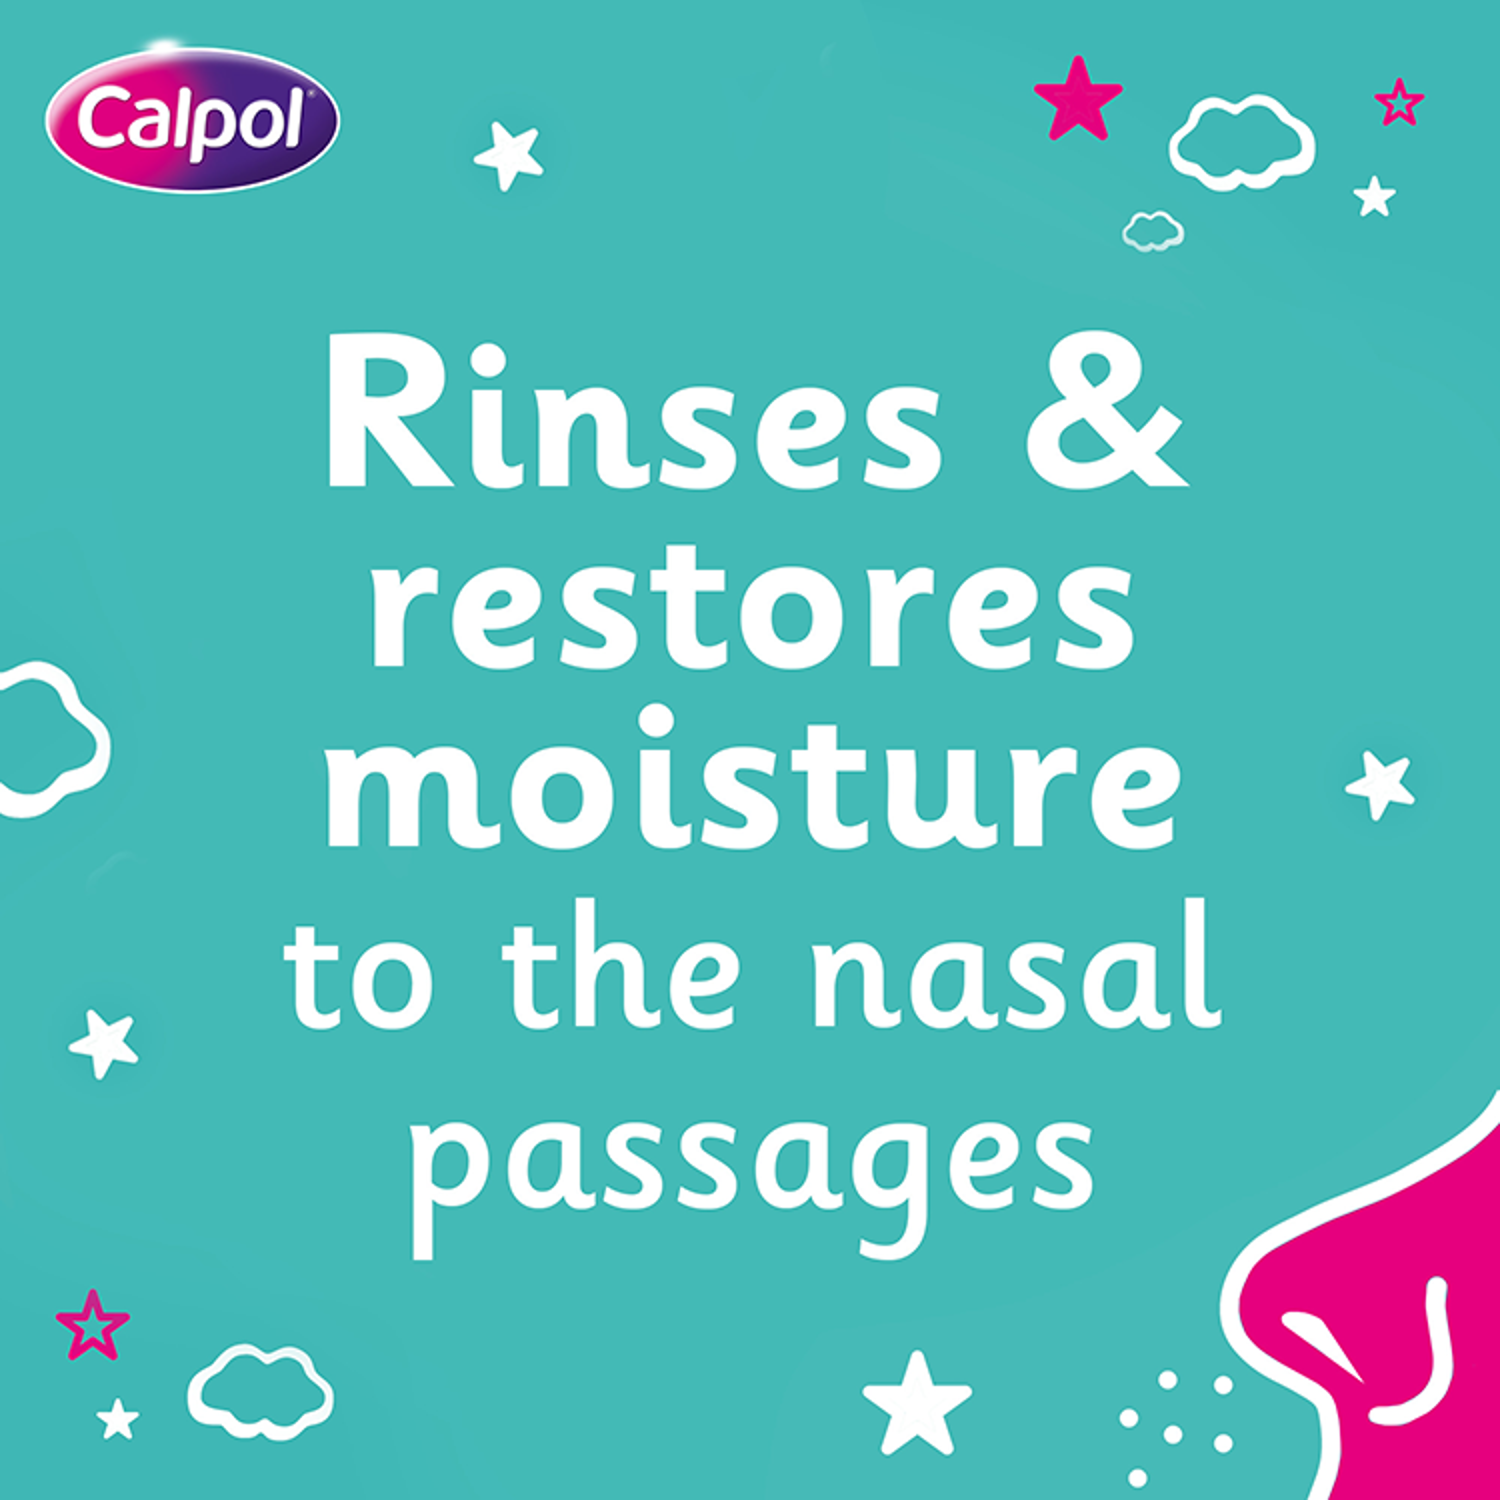 Calpol Soothe & Care Saline Nasal Drops